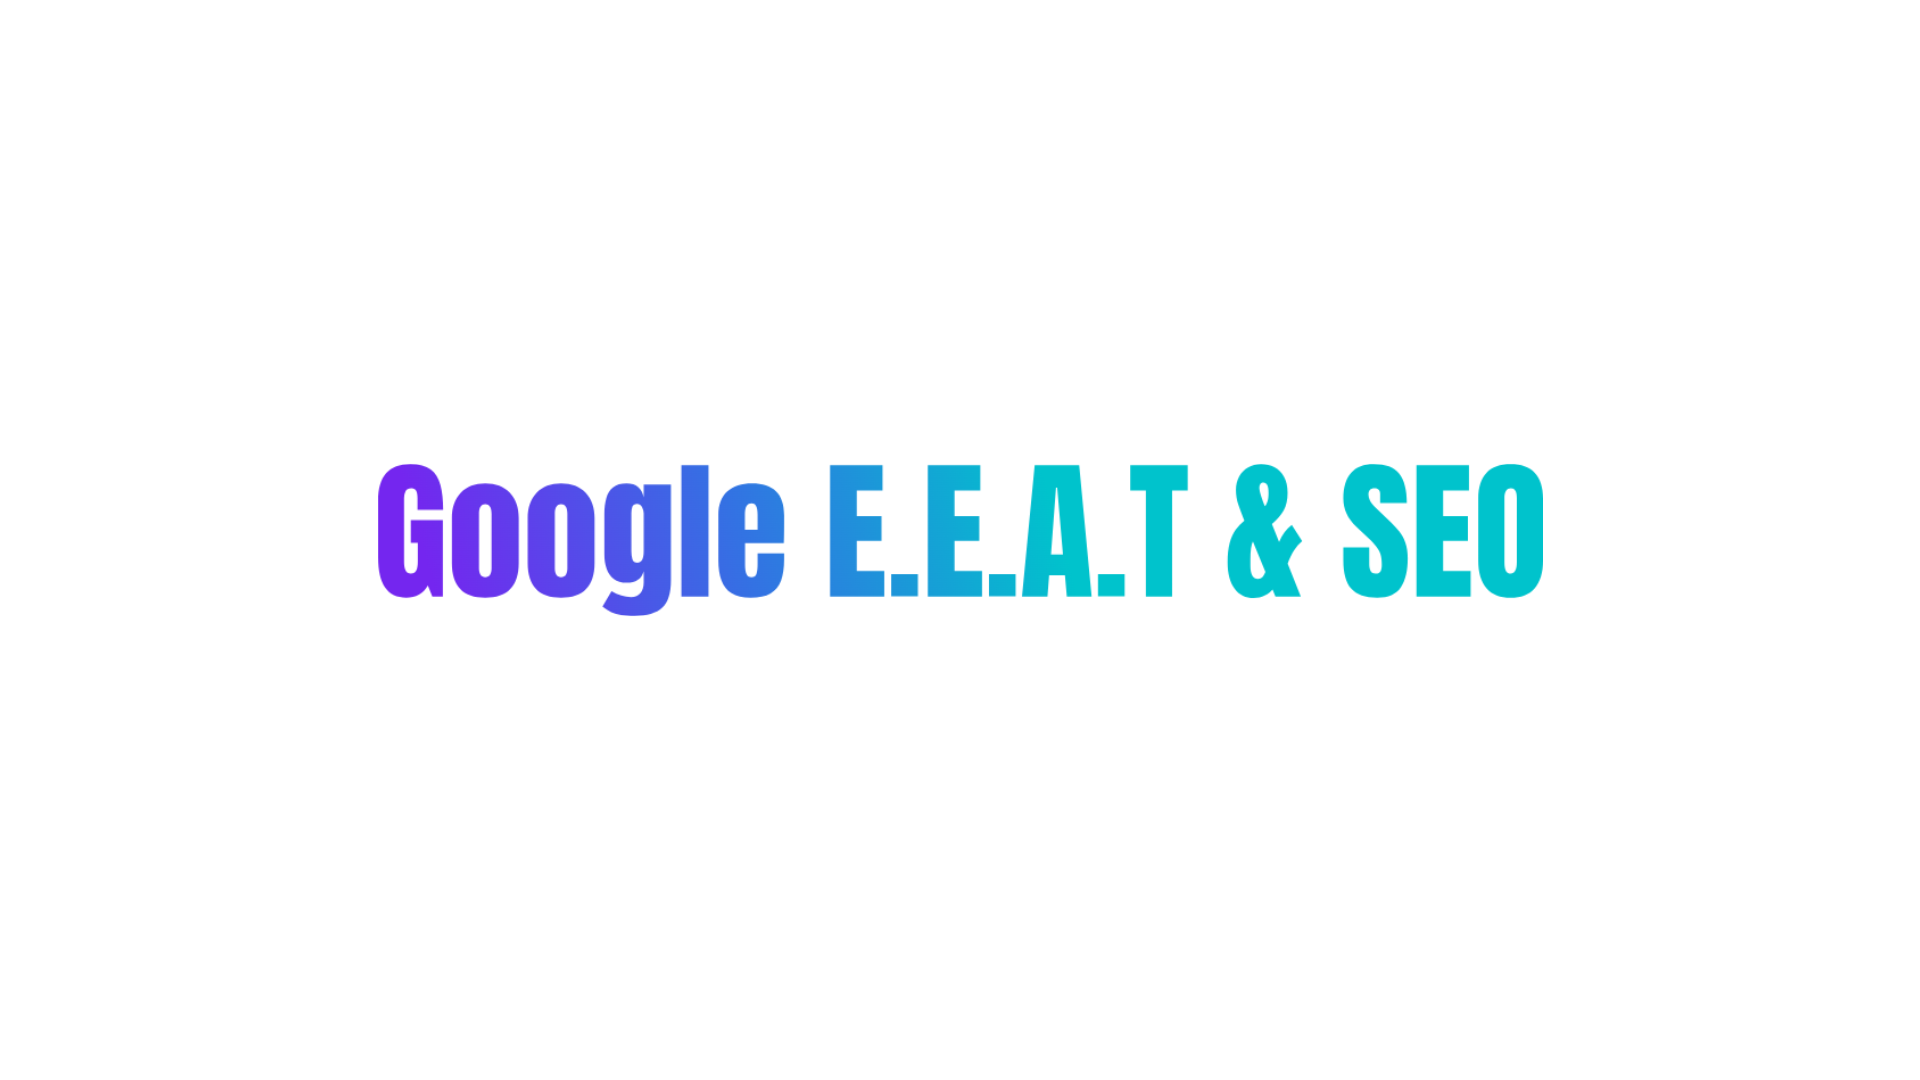 Say Hello to Google EEAT